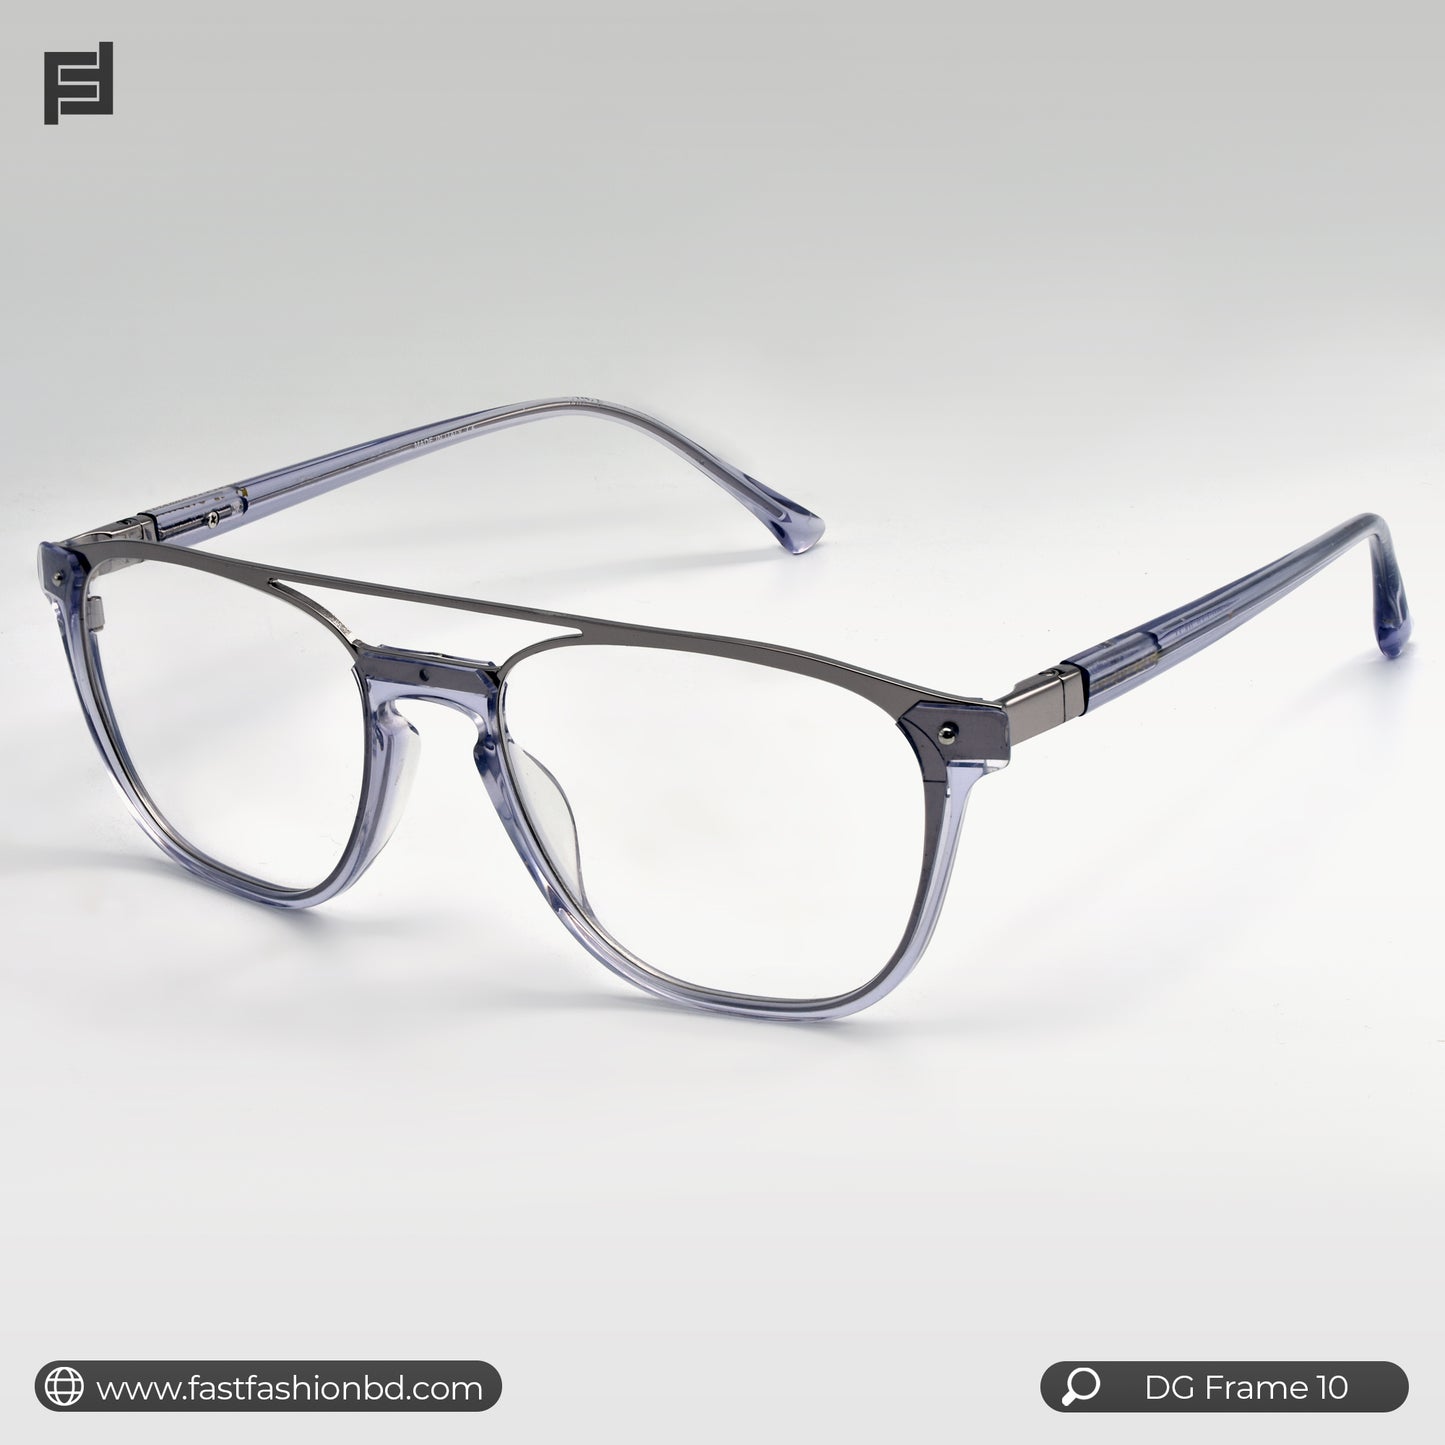 Premium Quality Eyeglass Optic Frame | DG Frame 10